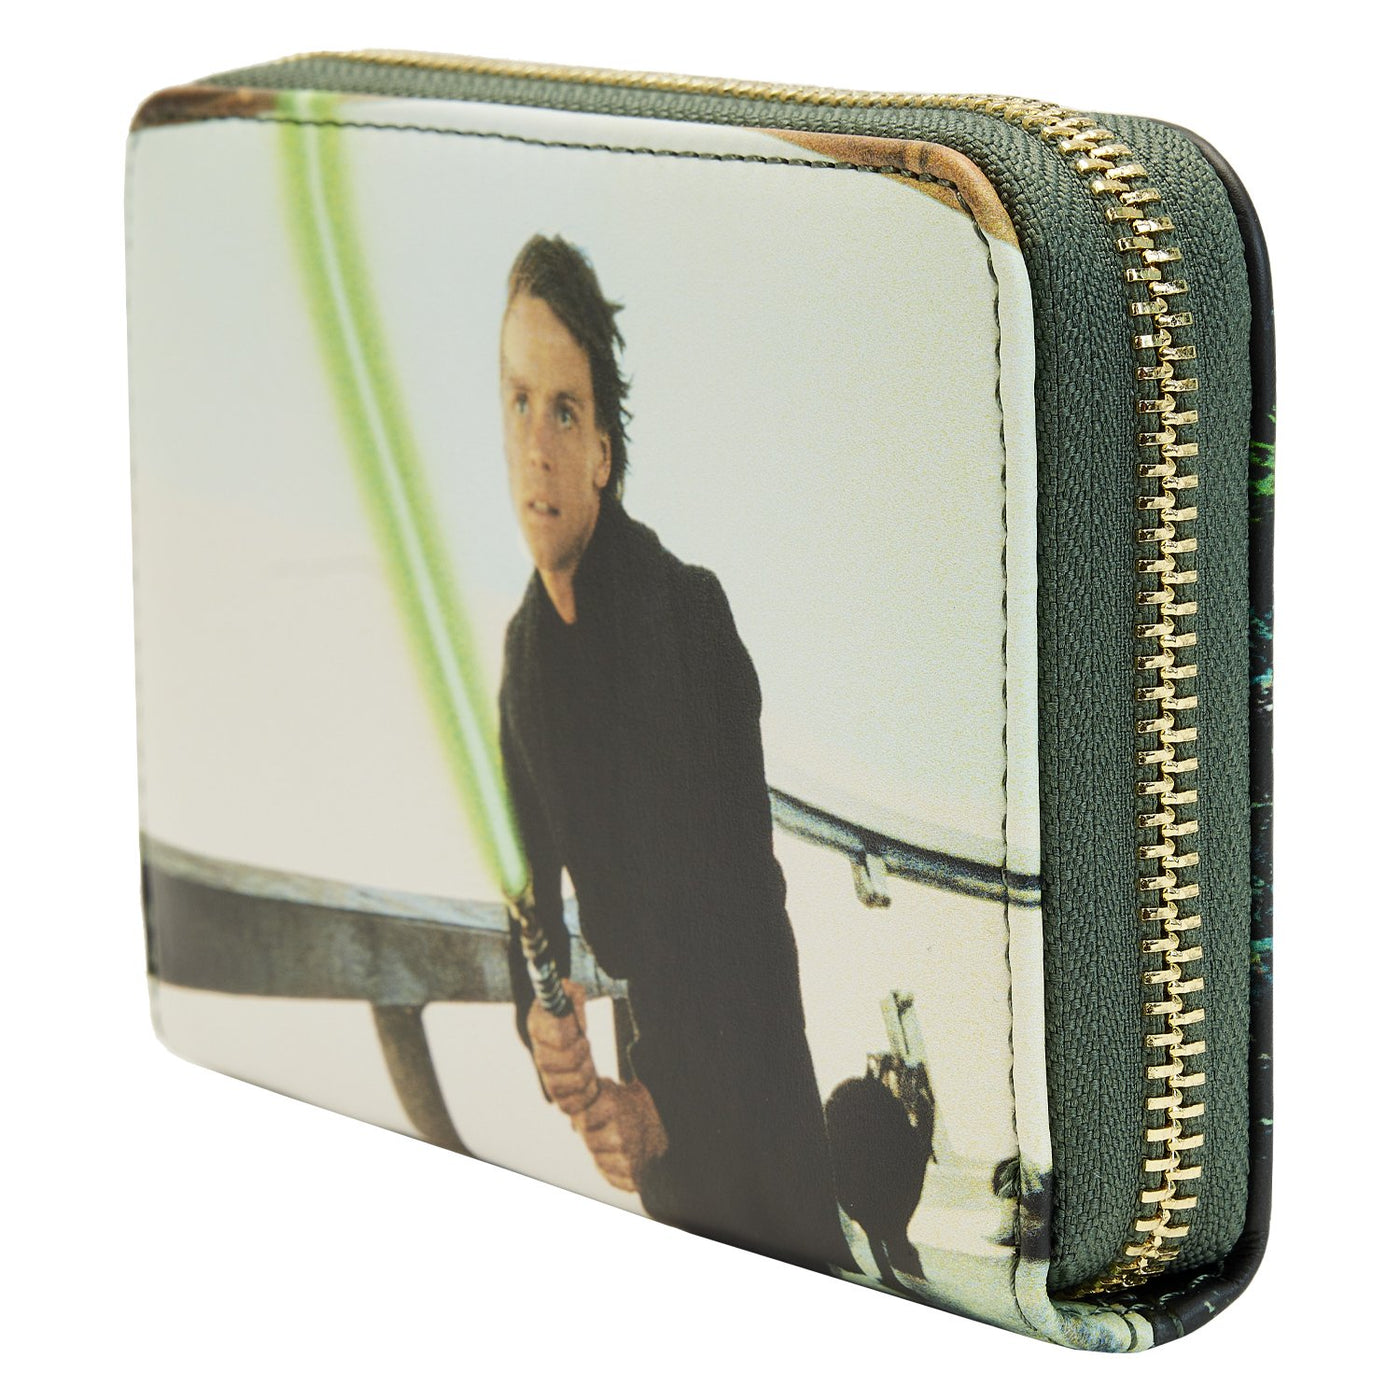 671803455313 - Loungefly Star Wars Scenes Return of the Jedi Zip-Around Wallet - Side View